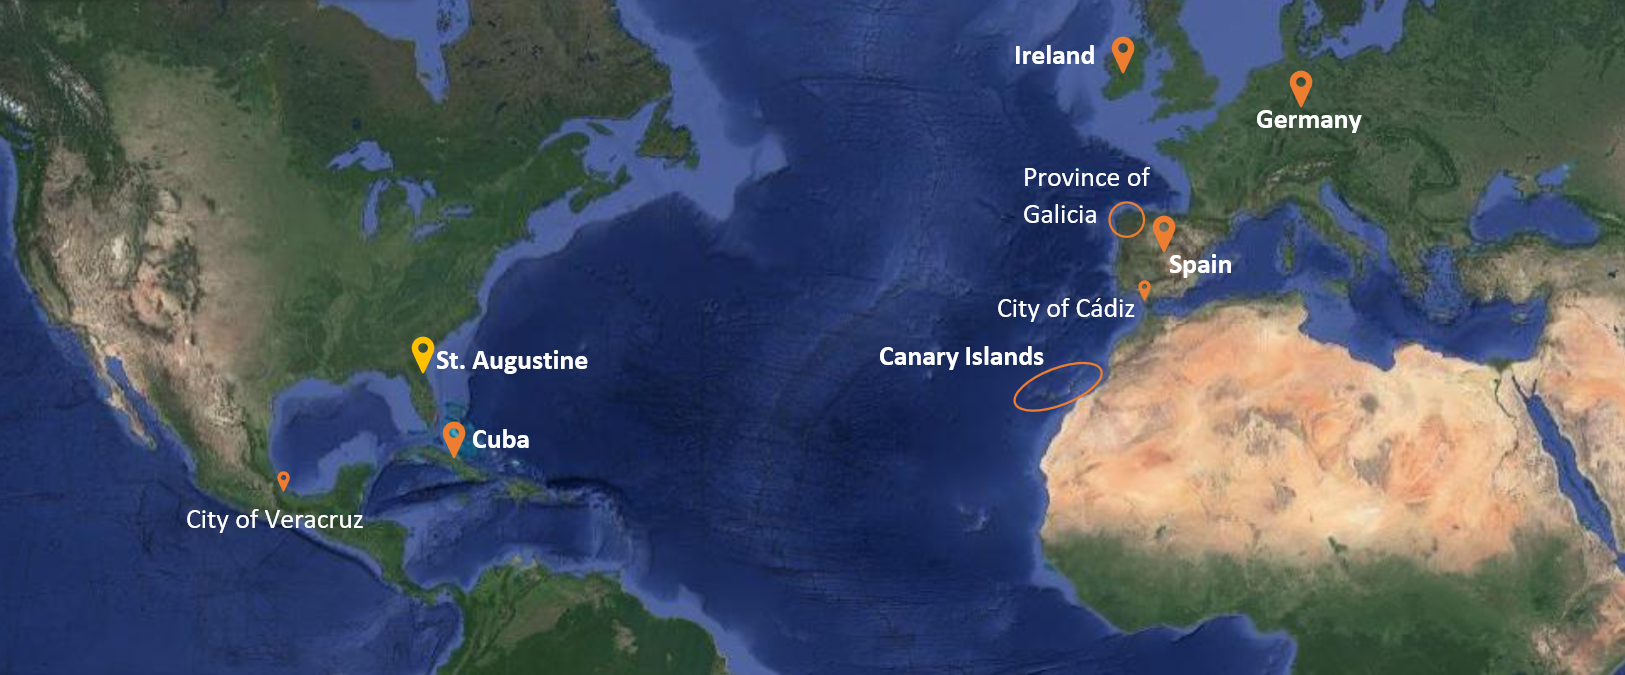 Map with markers in Veracruz, St. Augustine, Cuba, Canary Islands, Cadiz, Spain, Galicia, Ireland, Germany